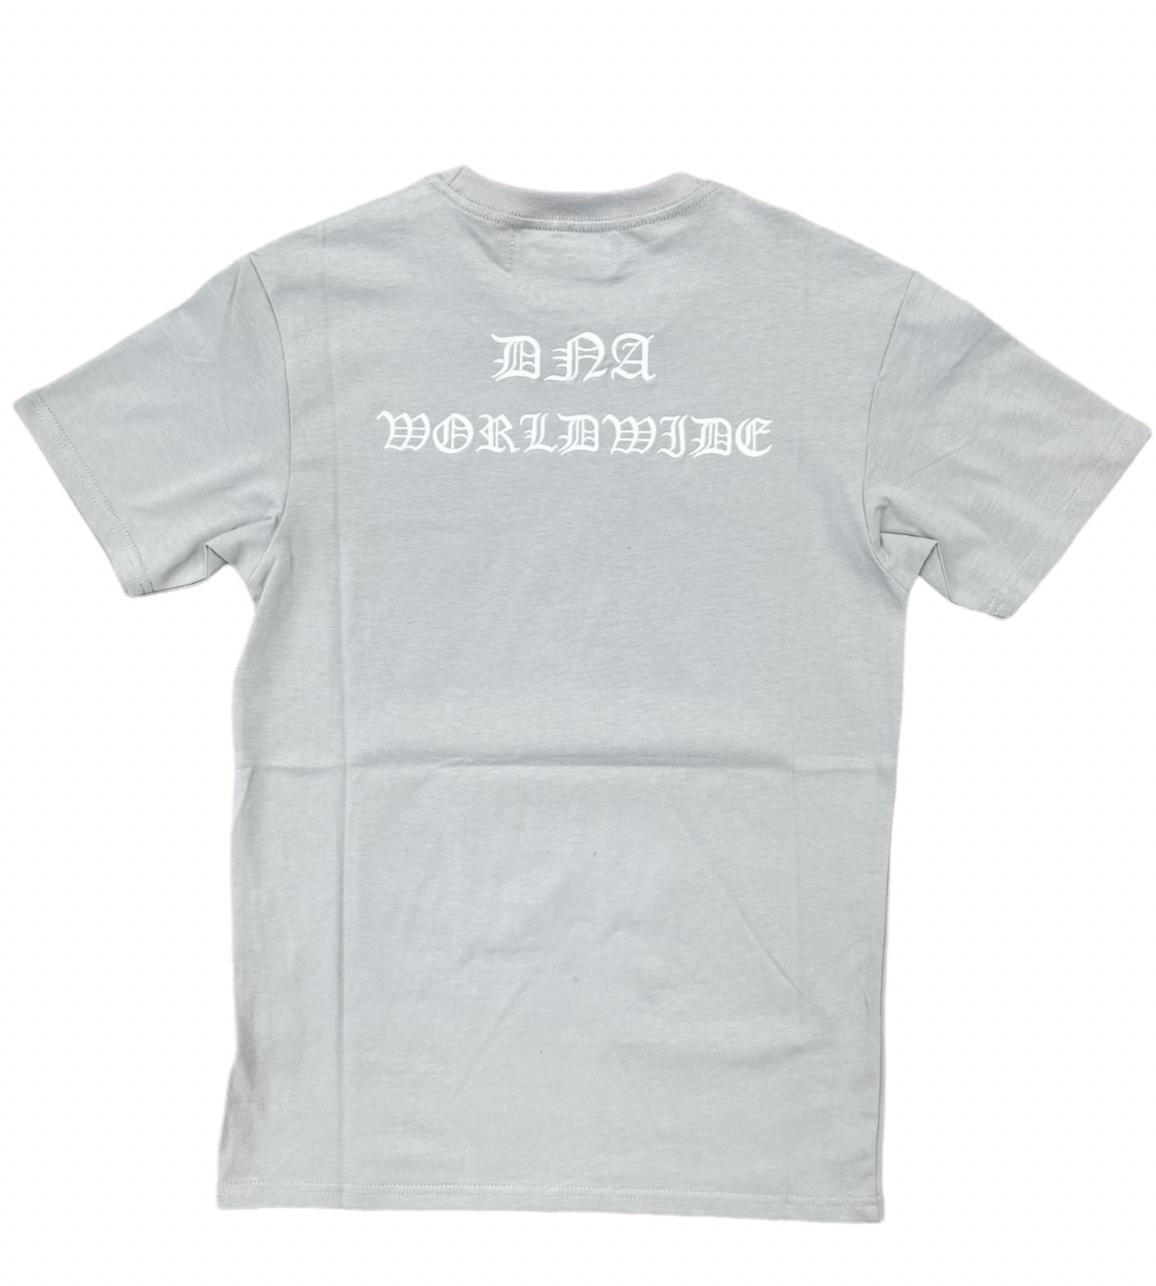 DNA Premium - Worldwide Old English T-shirt - Grey/White